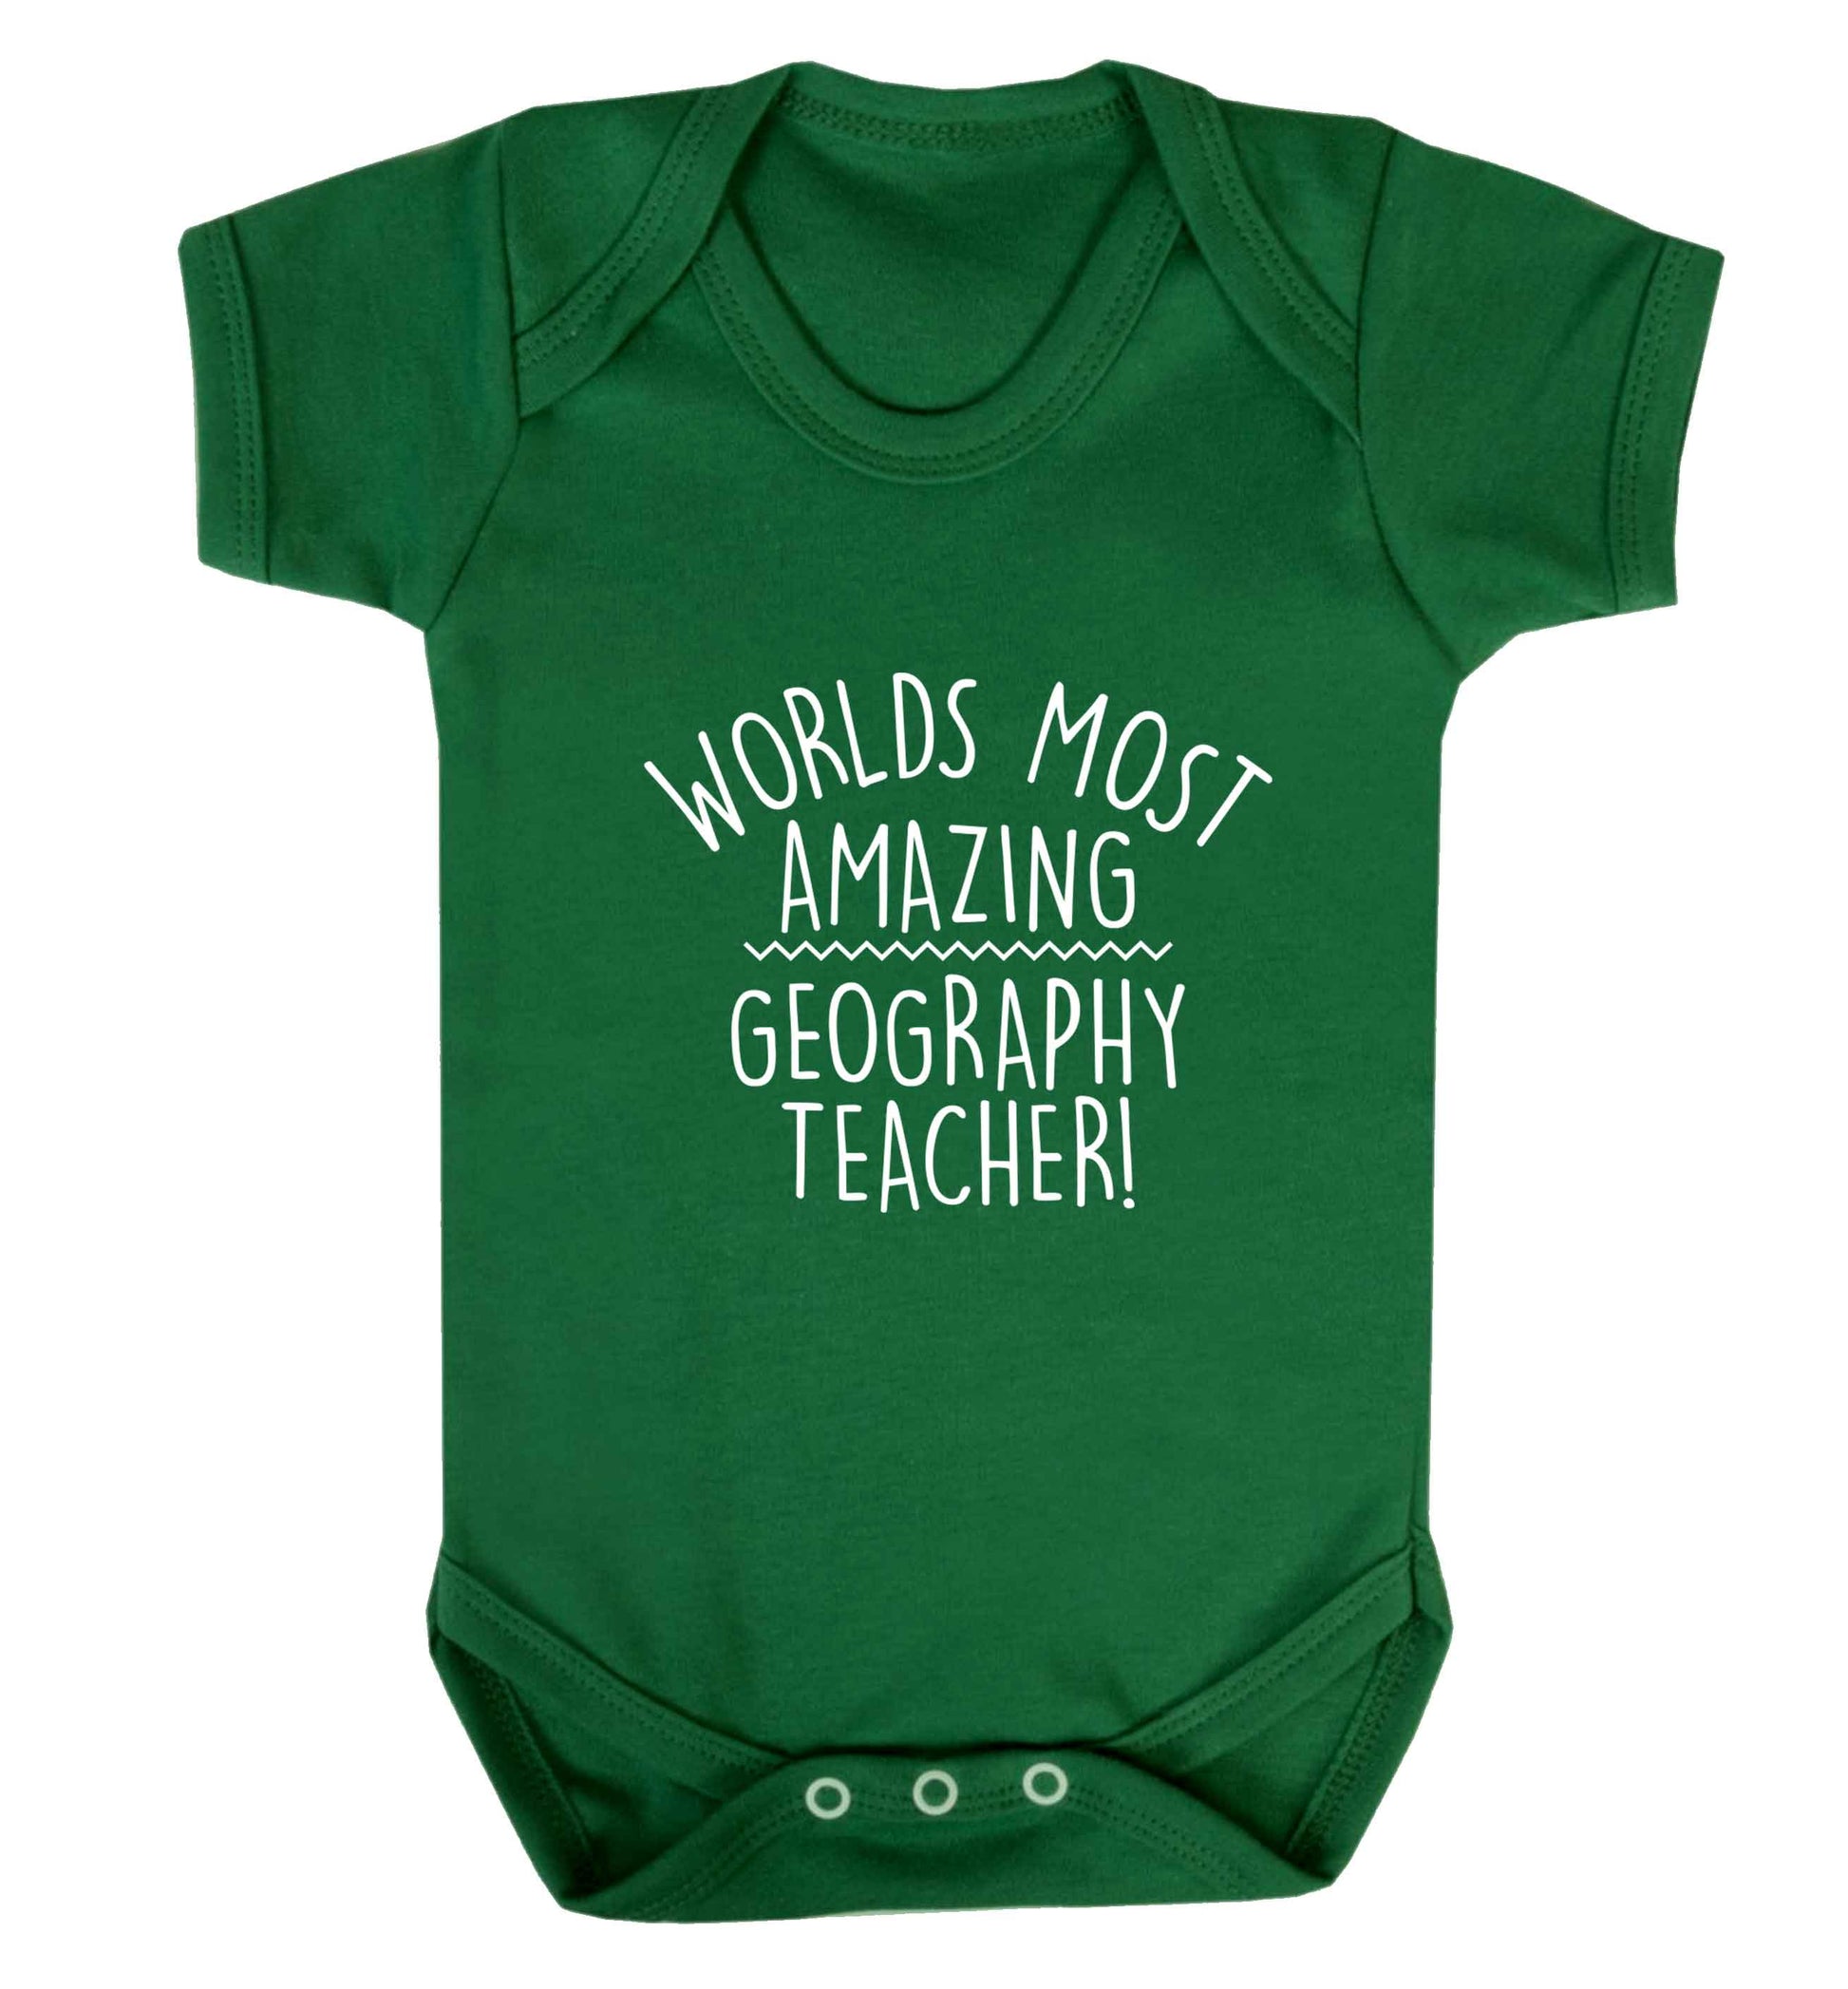 Worlds most amazing geography teacher baby vest green 18-24 months